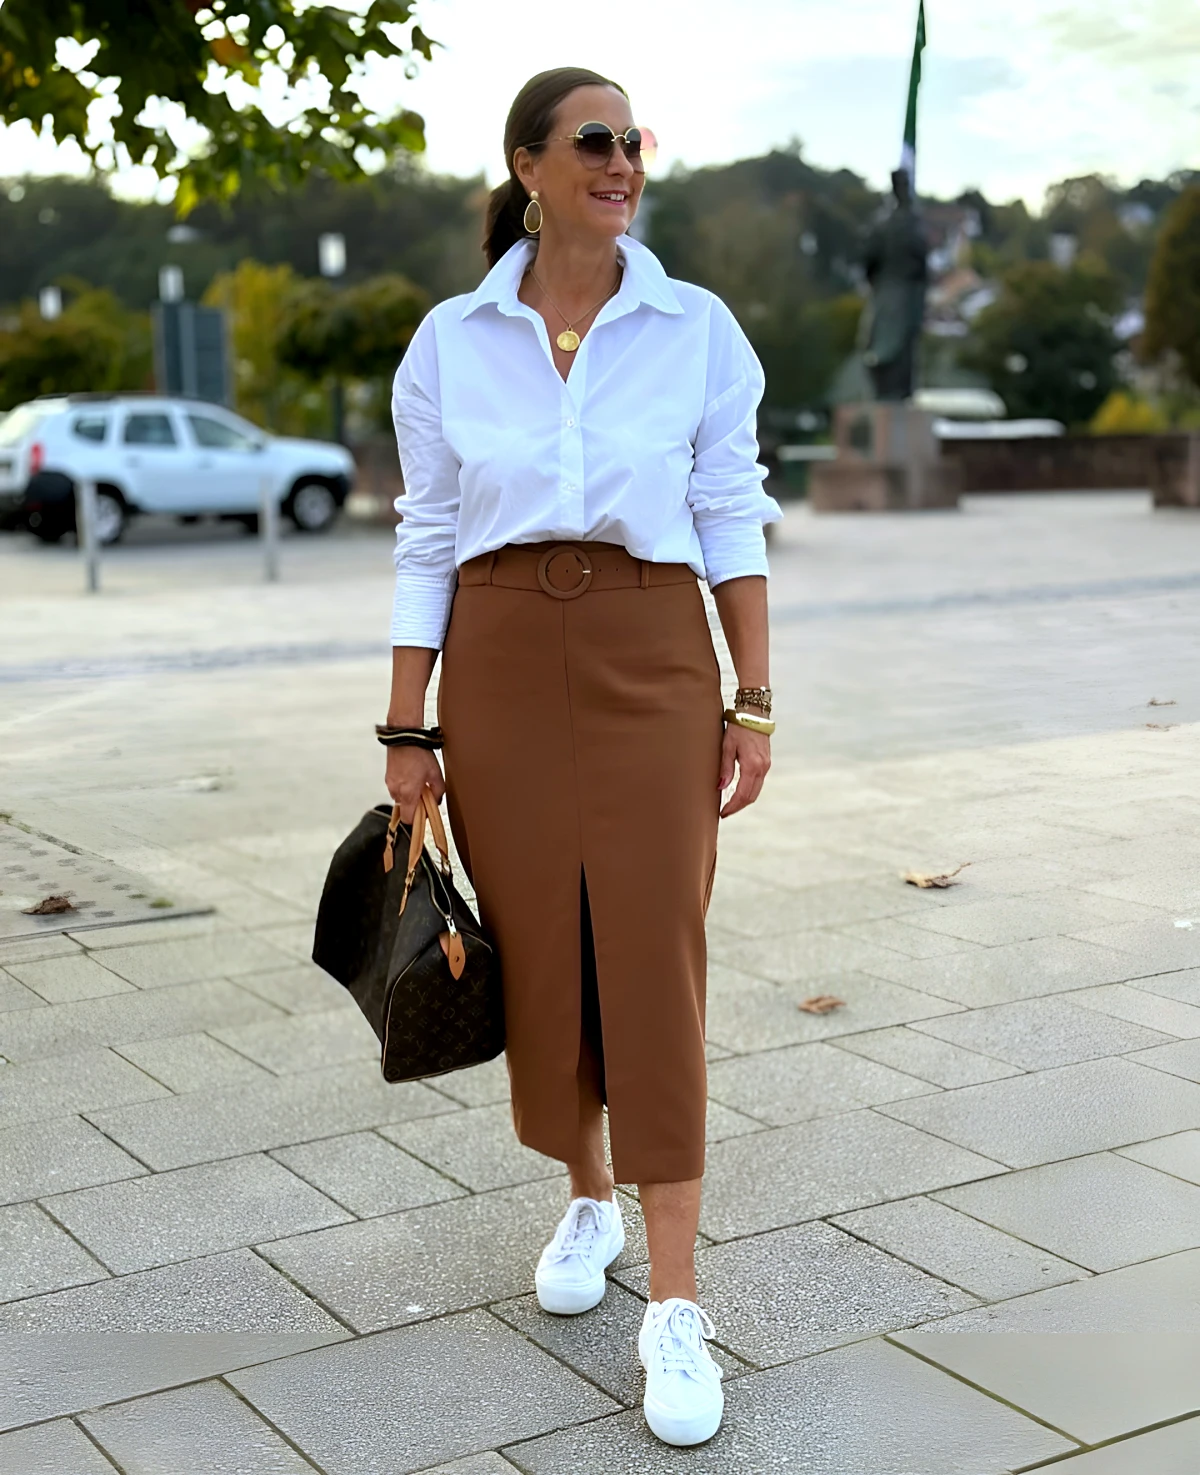 tenue moderne femme 50 ans chemise blanche jupe marron